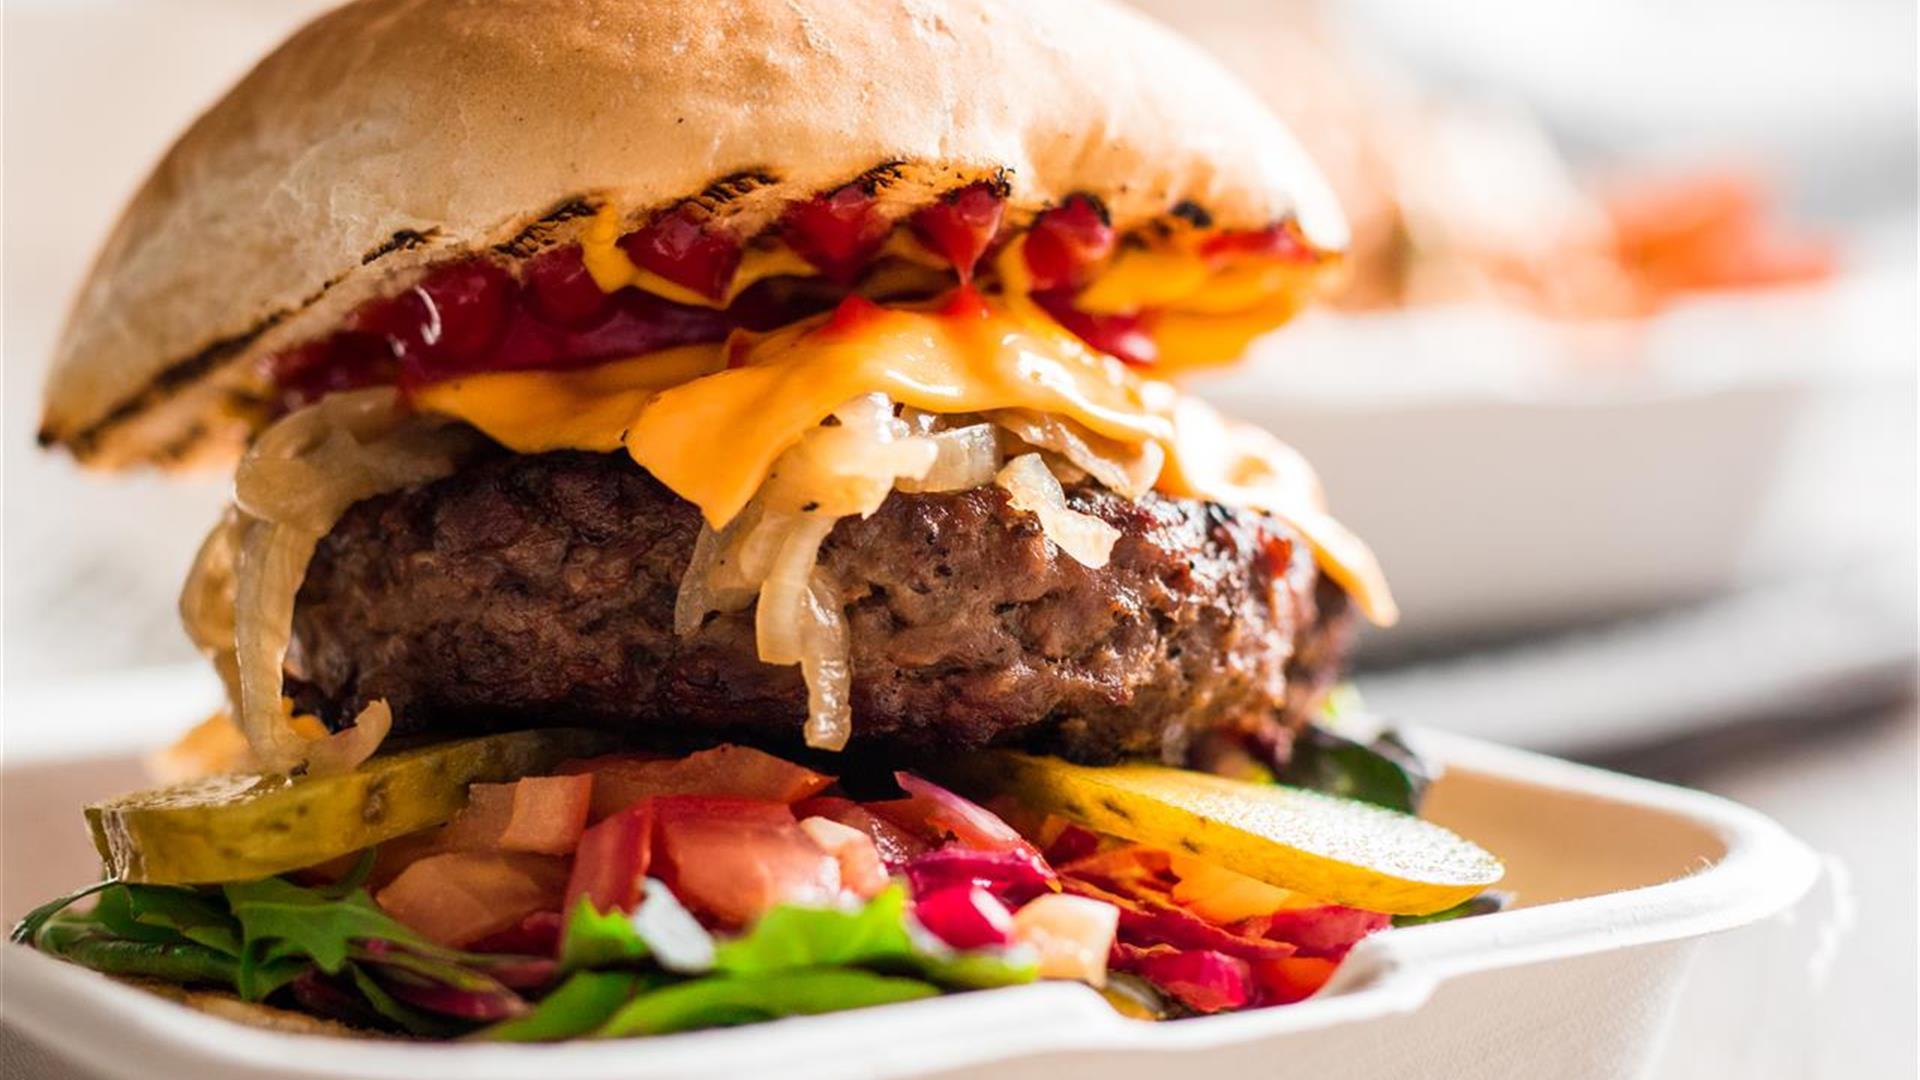 Close up image of burger